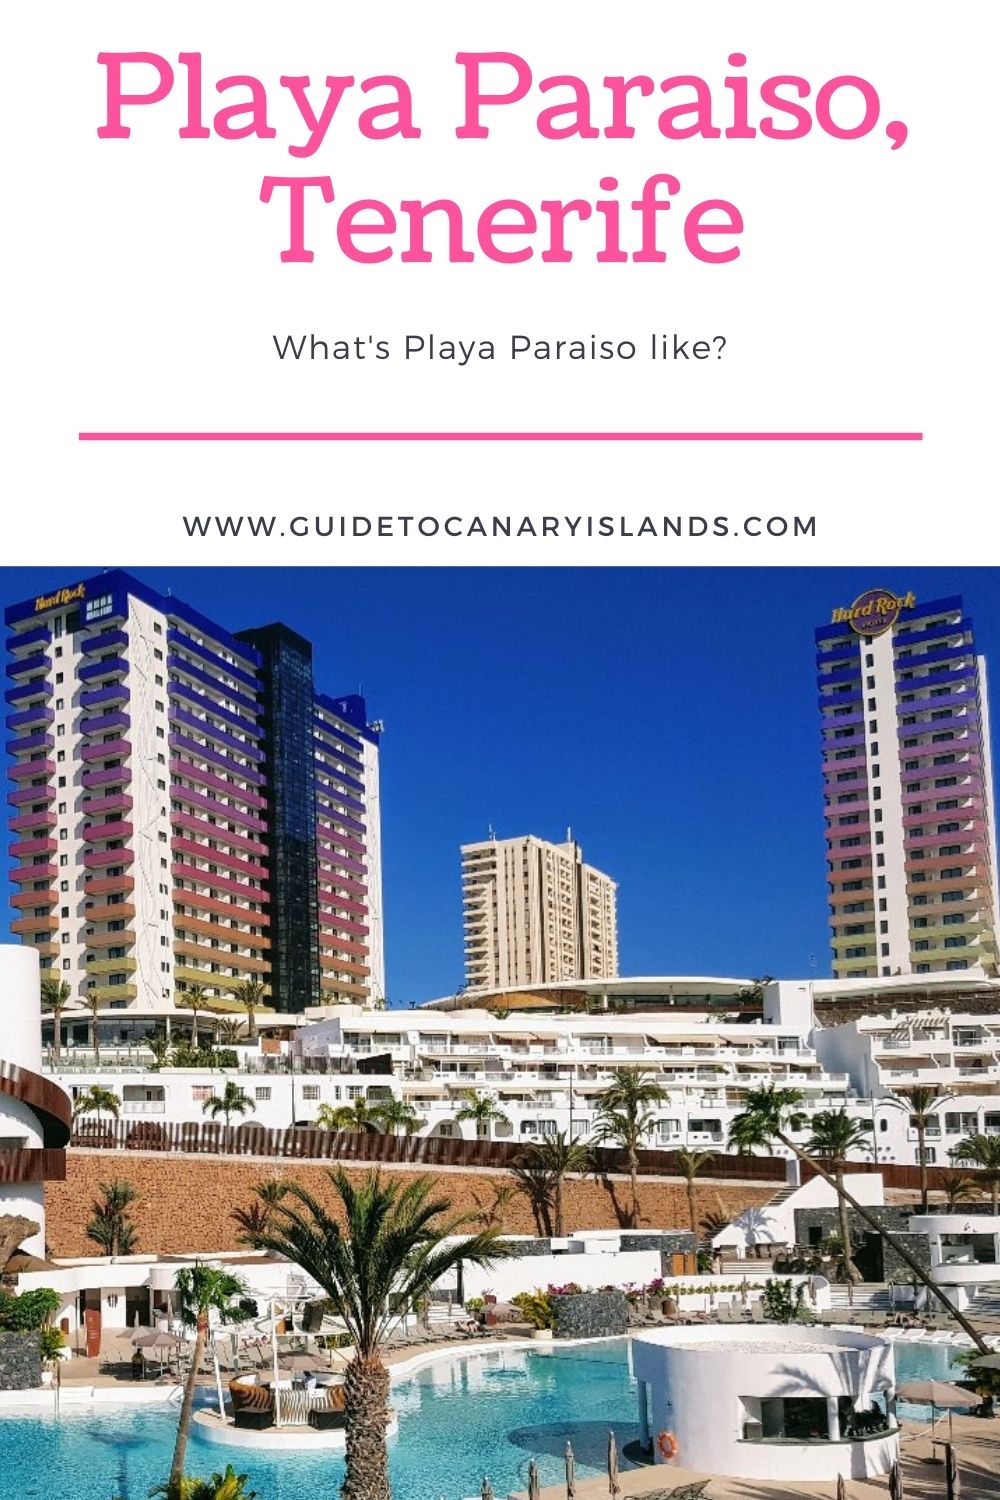 Playa Paraiso, Tenerife - Things to do & Where to stay